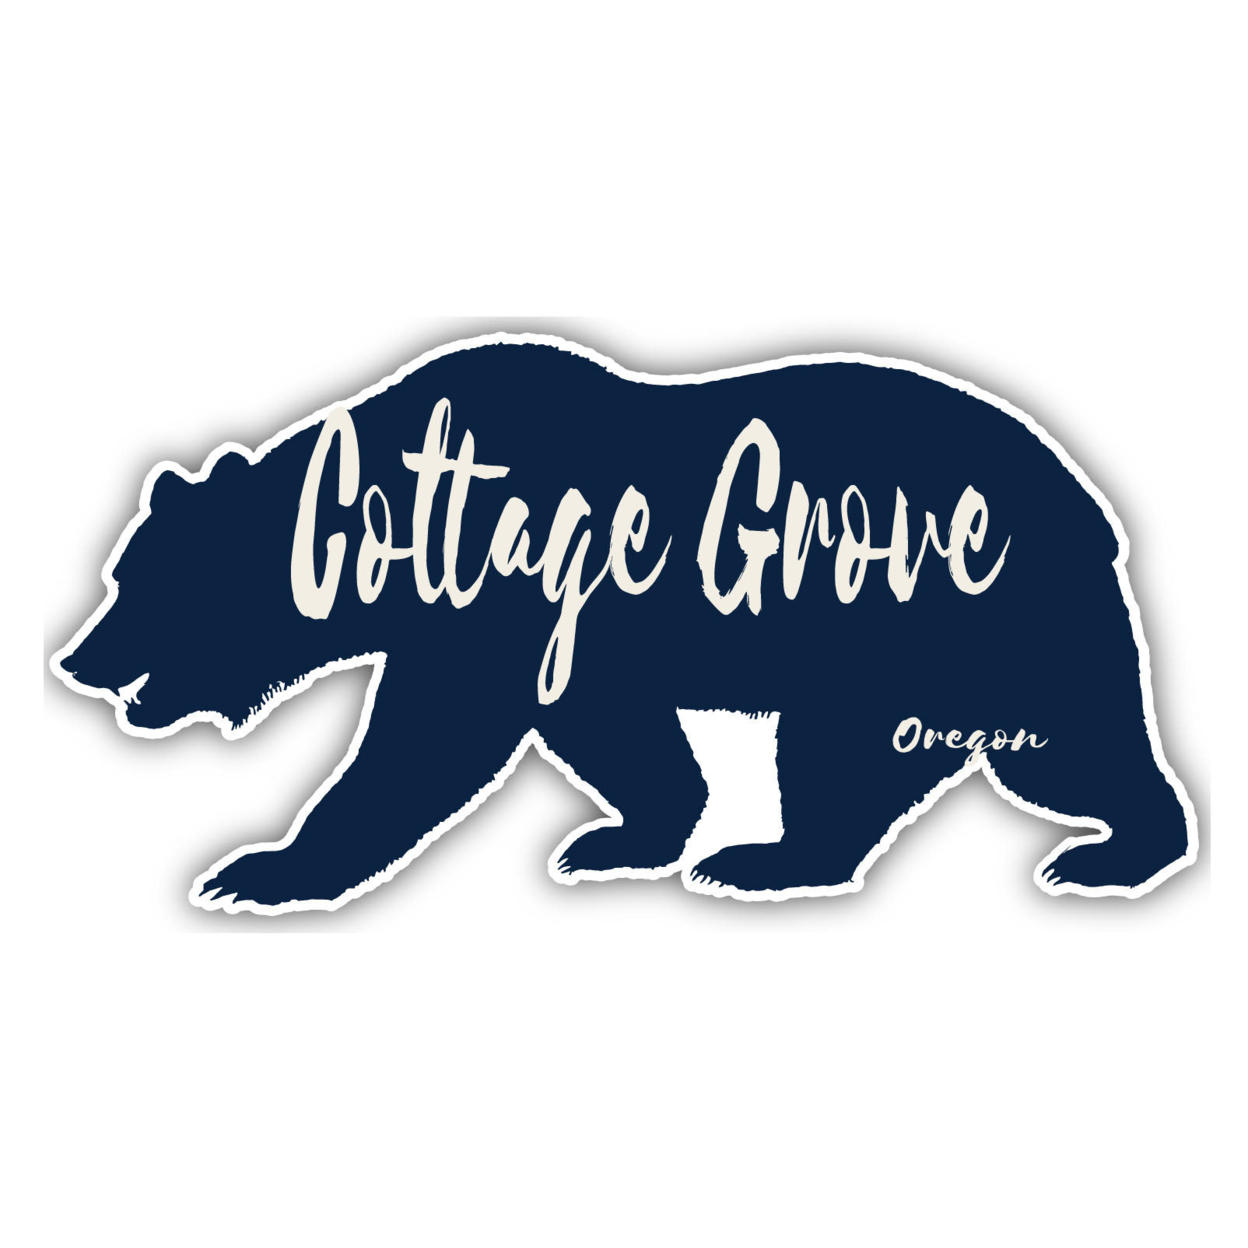 Cottage Grove Oregon Souvenir Decorative Stickers (Choose Theme And Size) - 4-Pack, 10-Inch, Tent